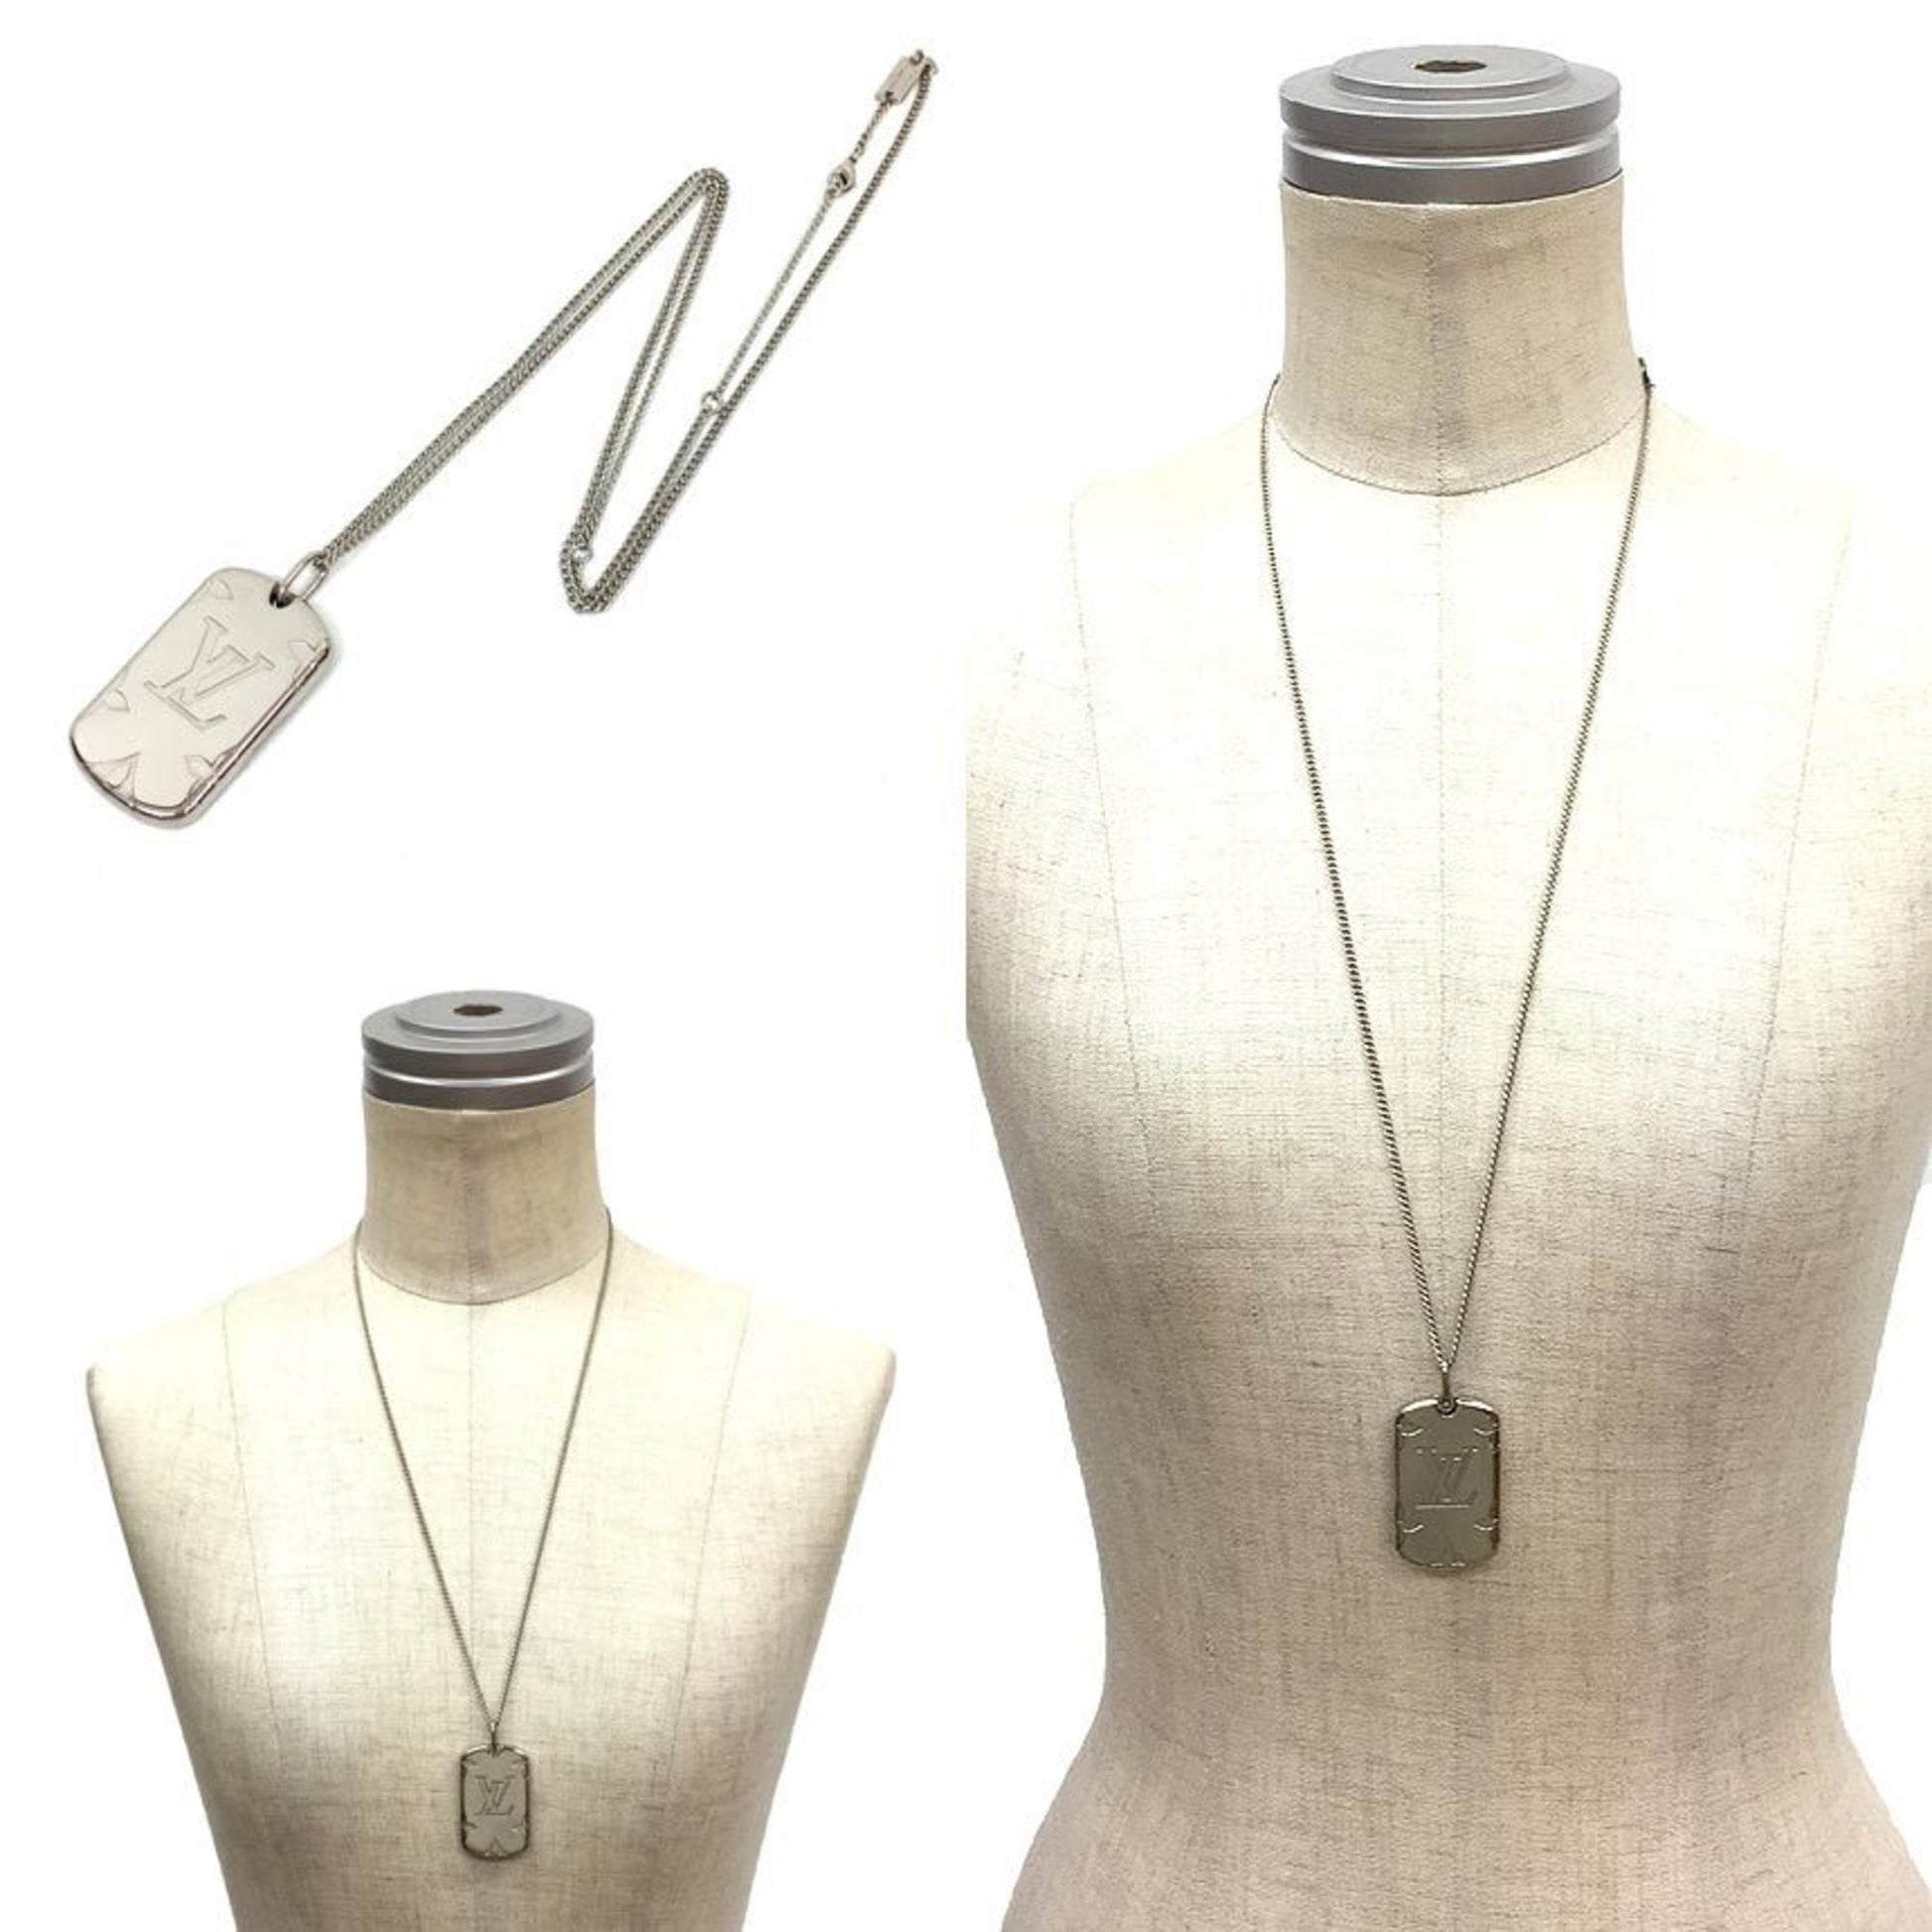 LOUIS VUITTON Monogram Chain Shades Locket Pendant Necklace Silver 1233554